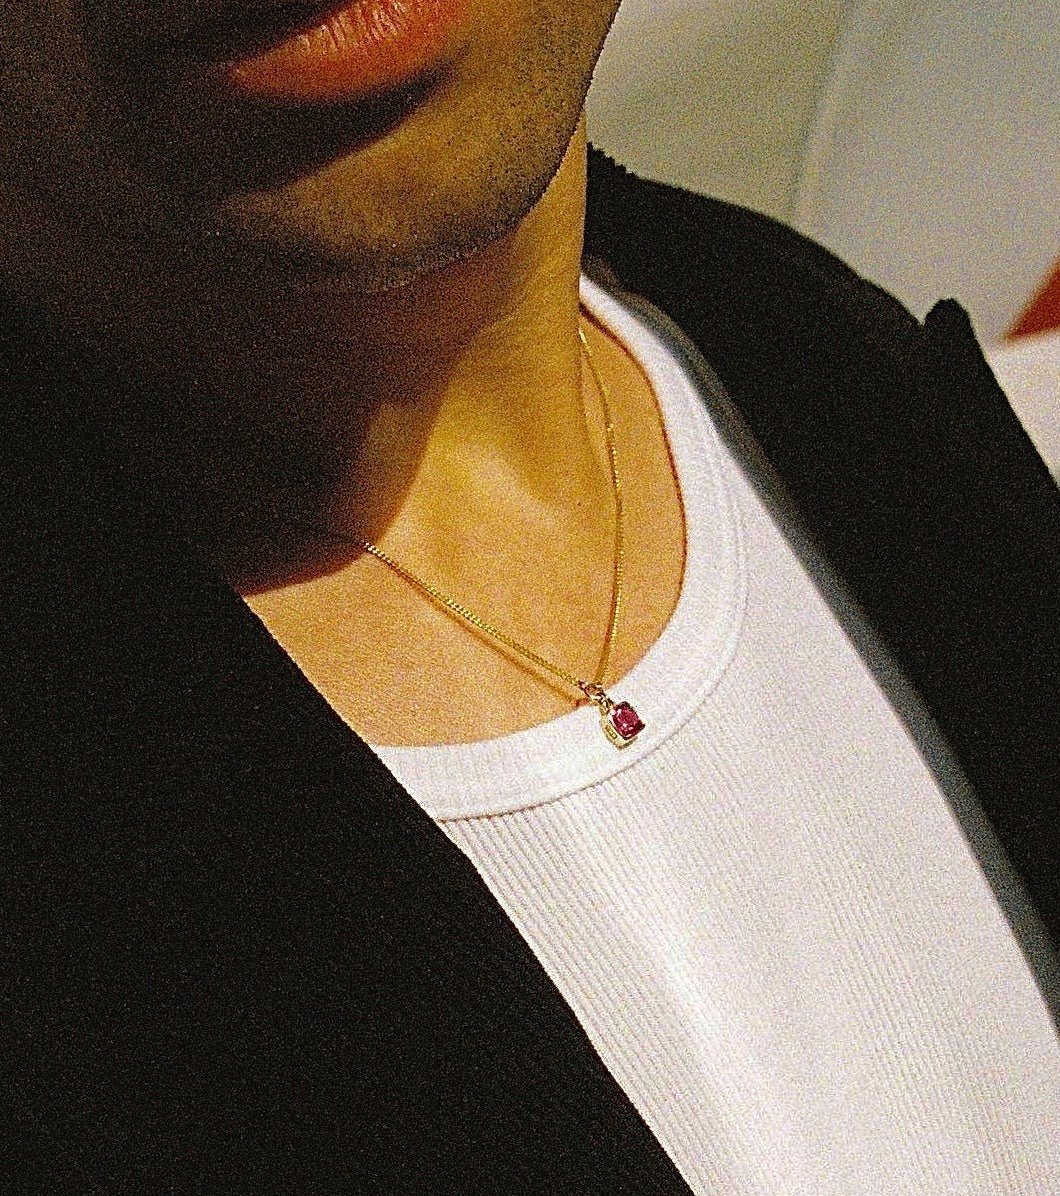 Facet Garnet pendant - Sar Jewellery